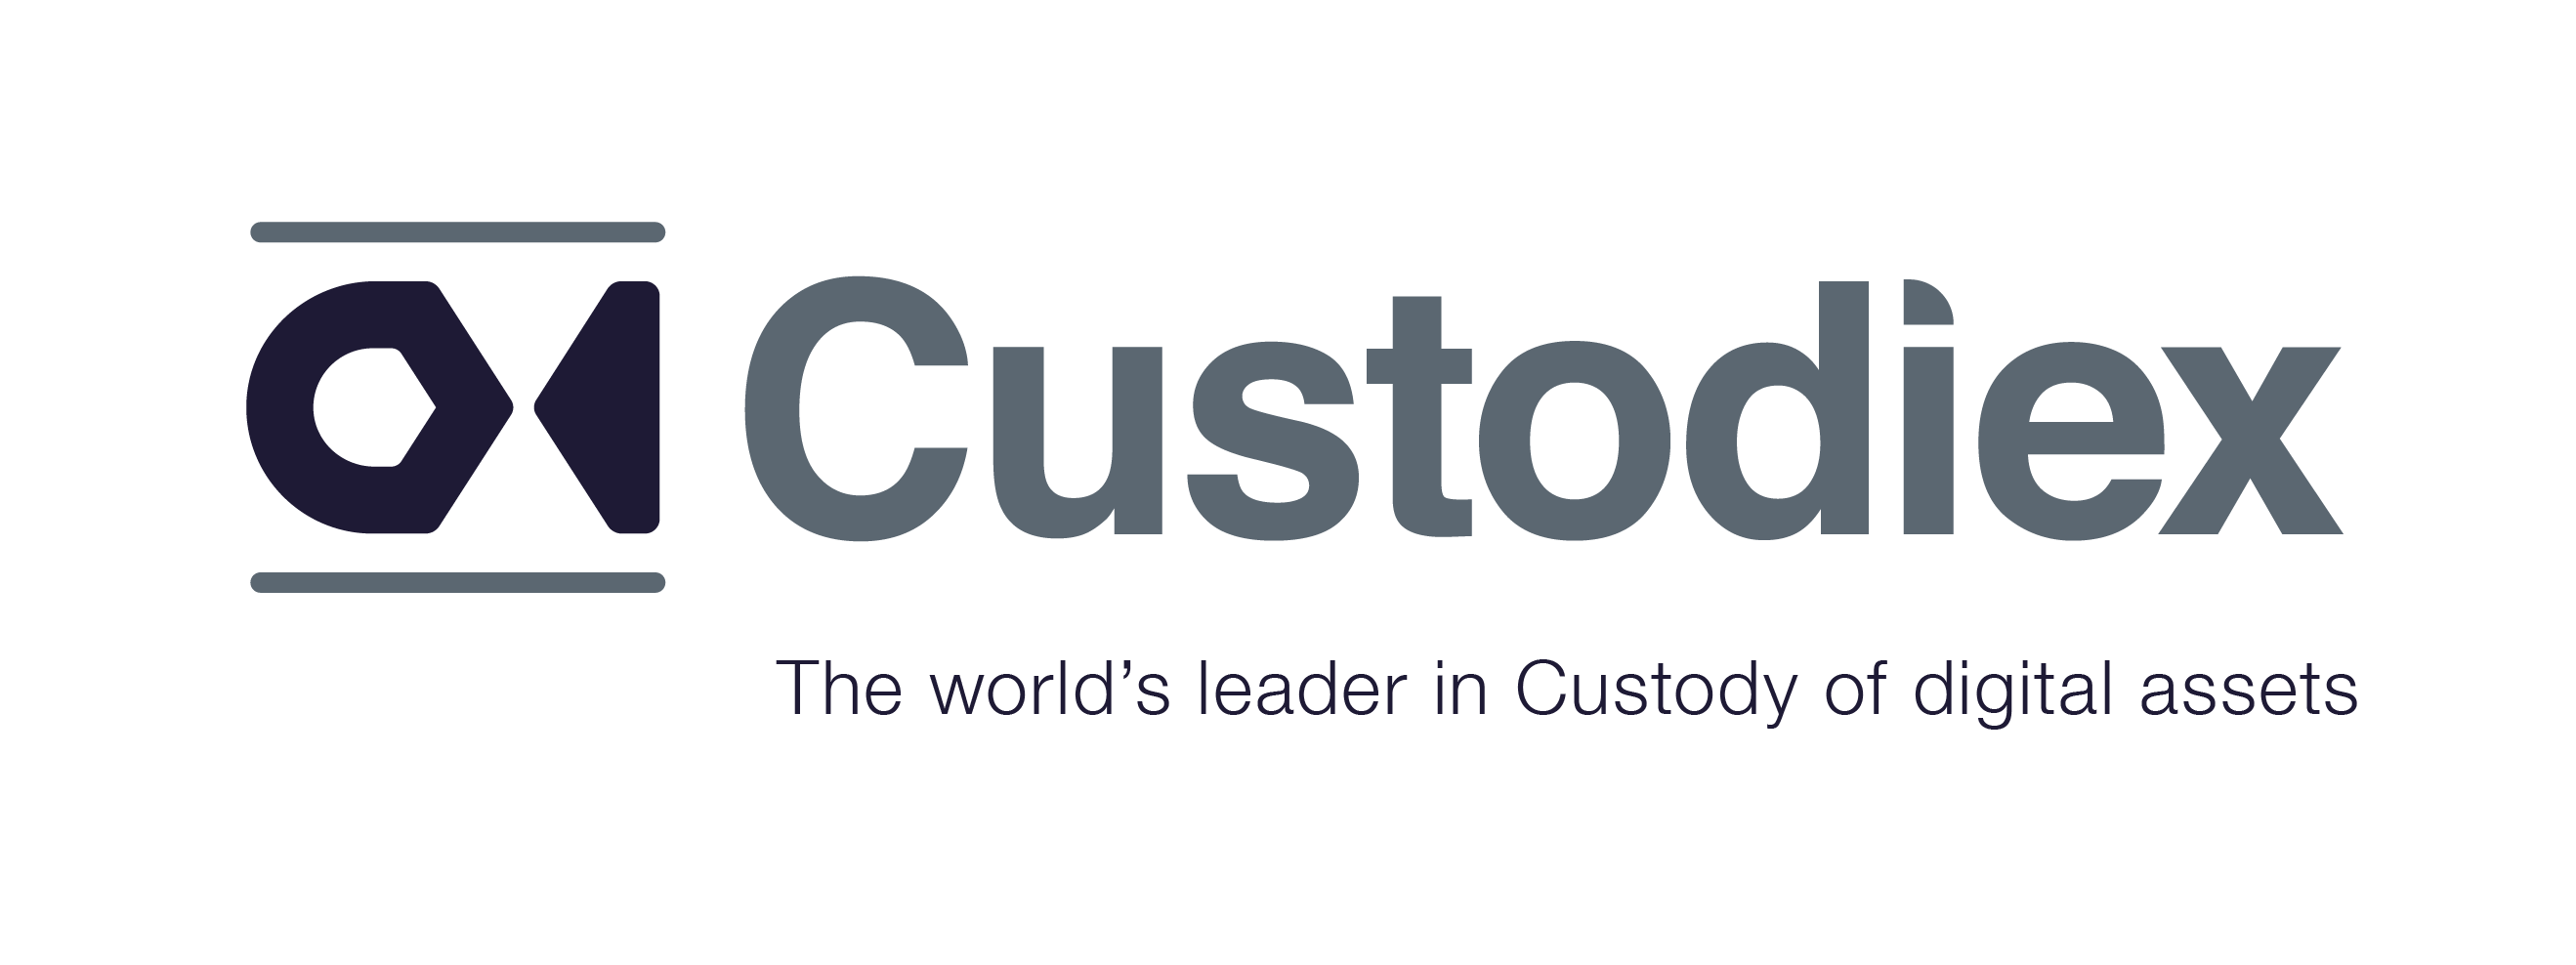 Custodiex Logo